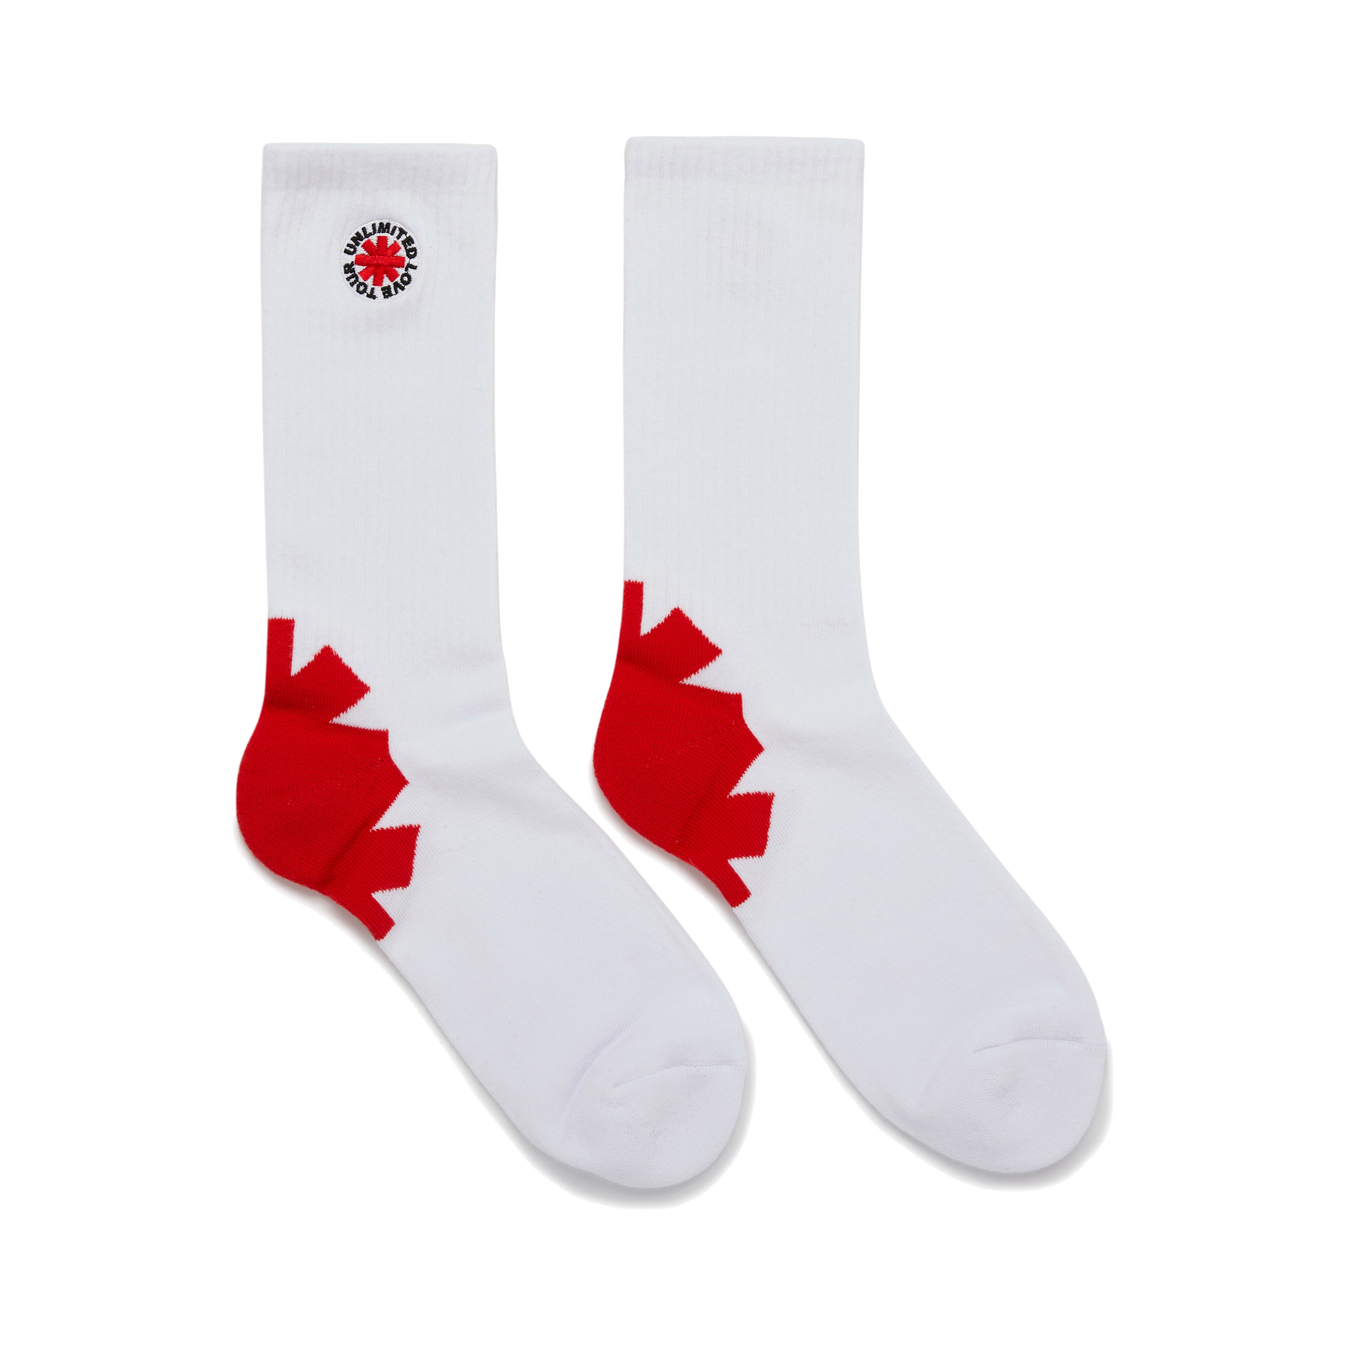 Asterisk Socks White – Red Hot Chili Peppers